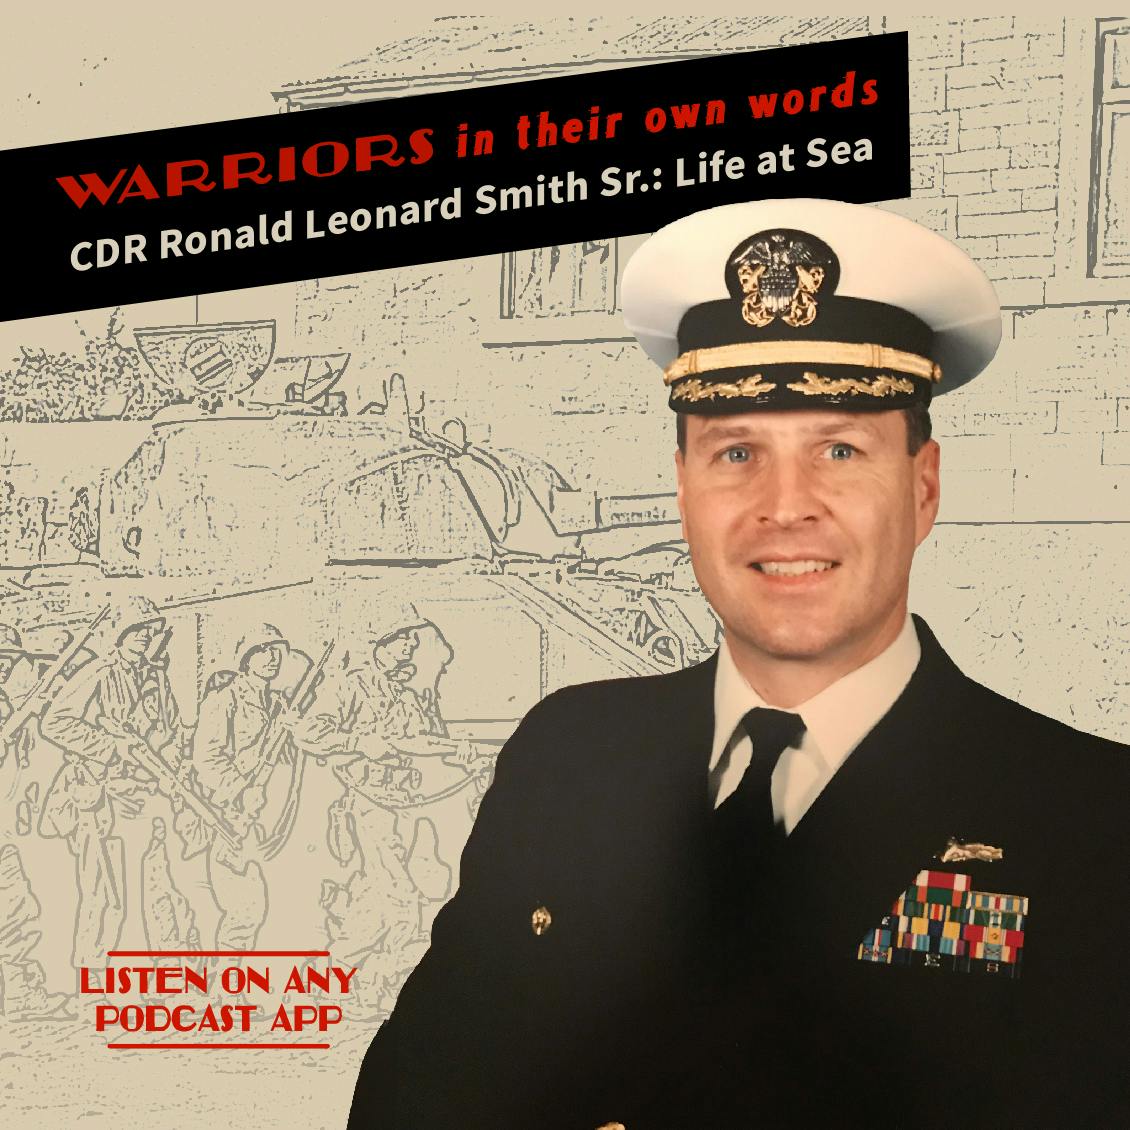 CDR Ronald Leonard Smith Sr.: Life at Sea